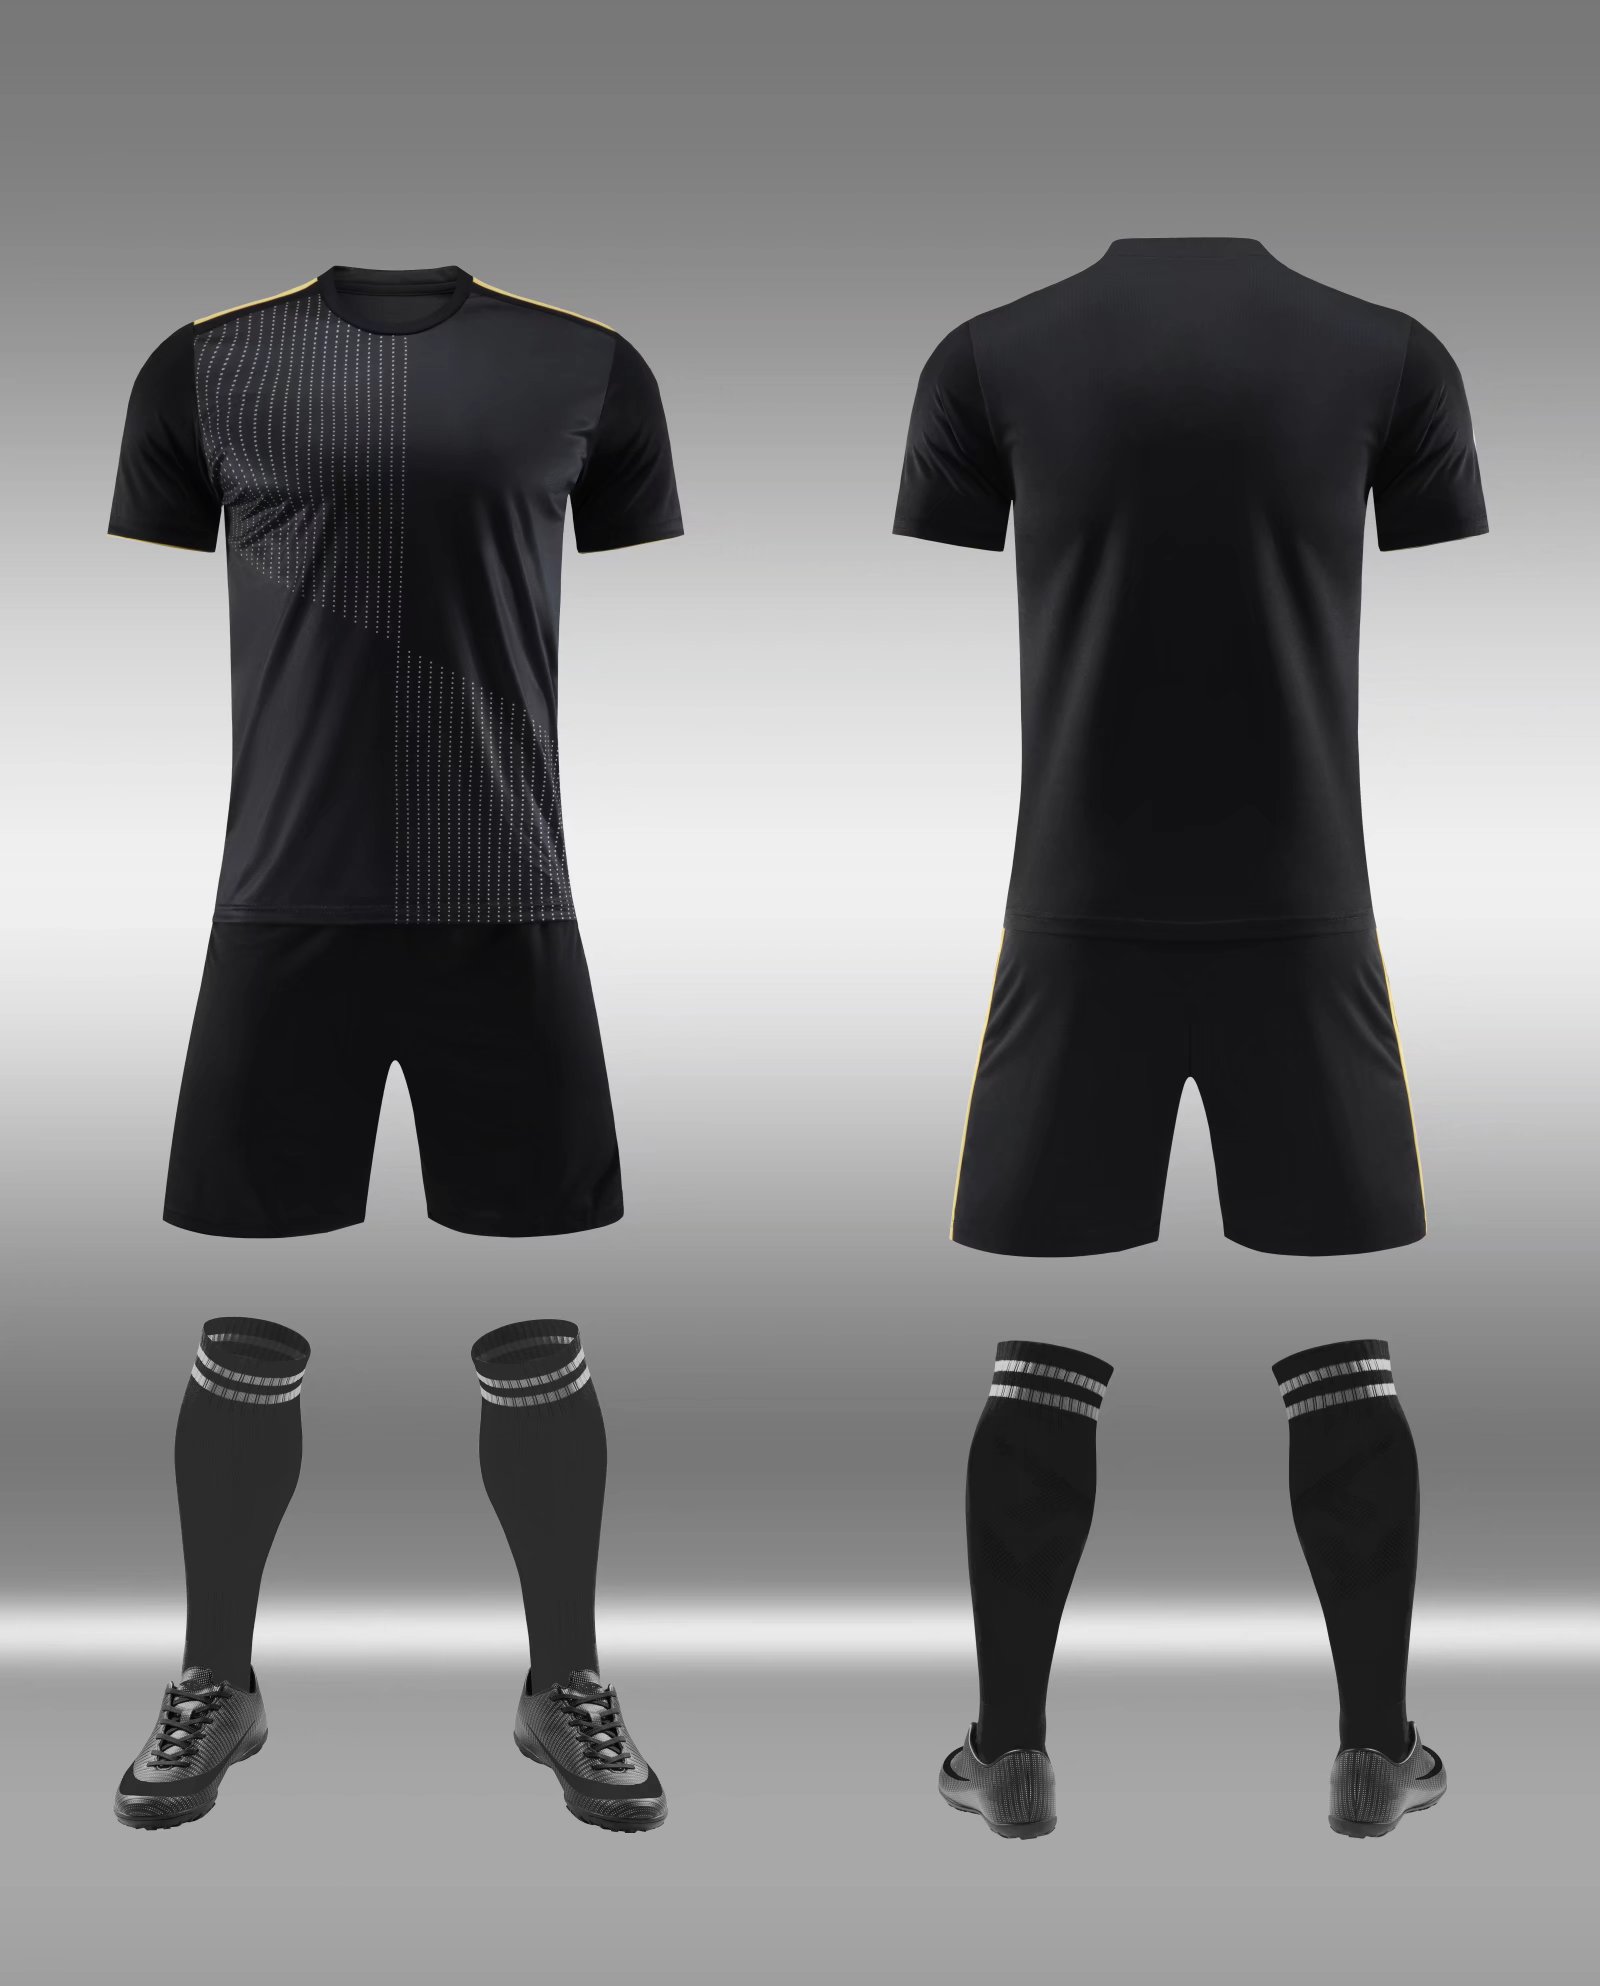 EUR217 soccer jersey